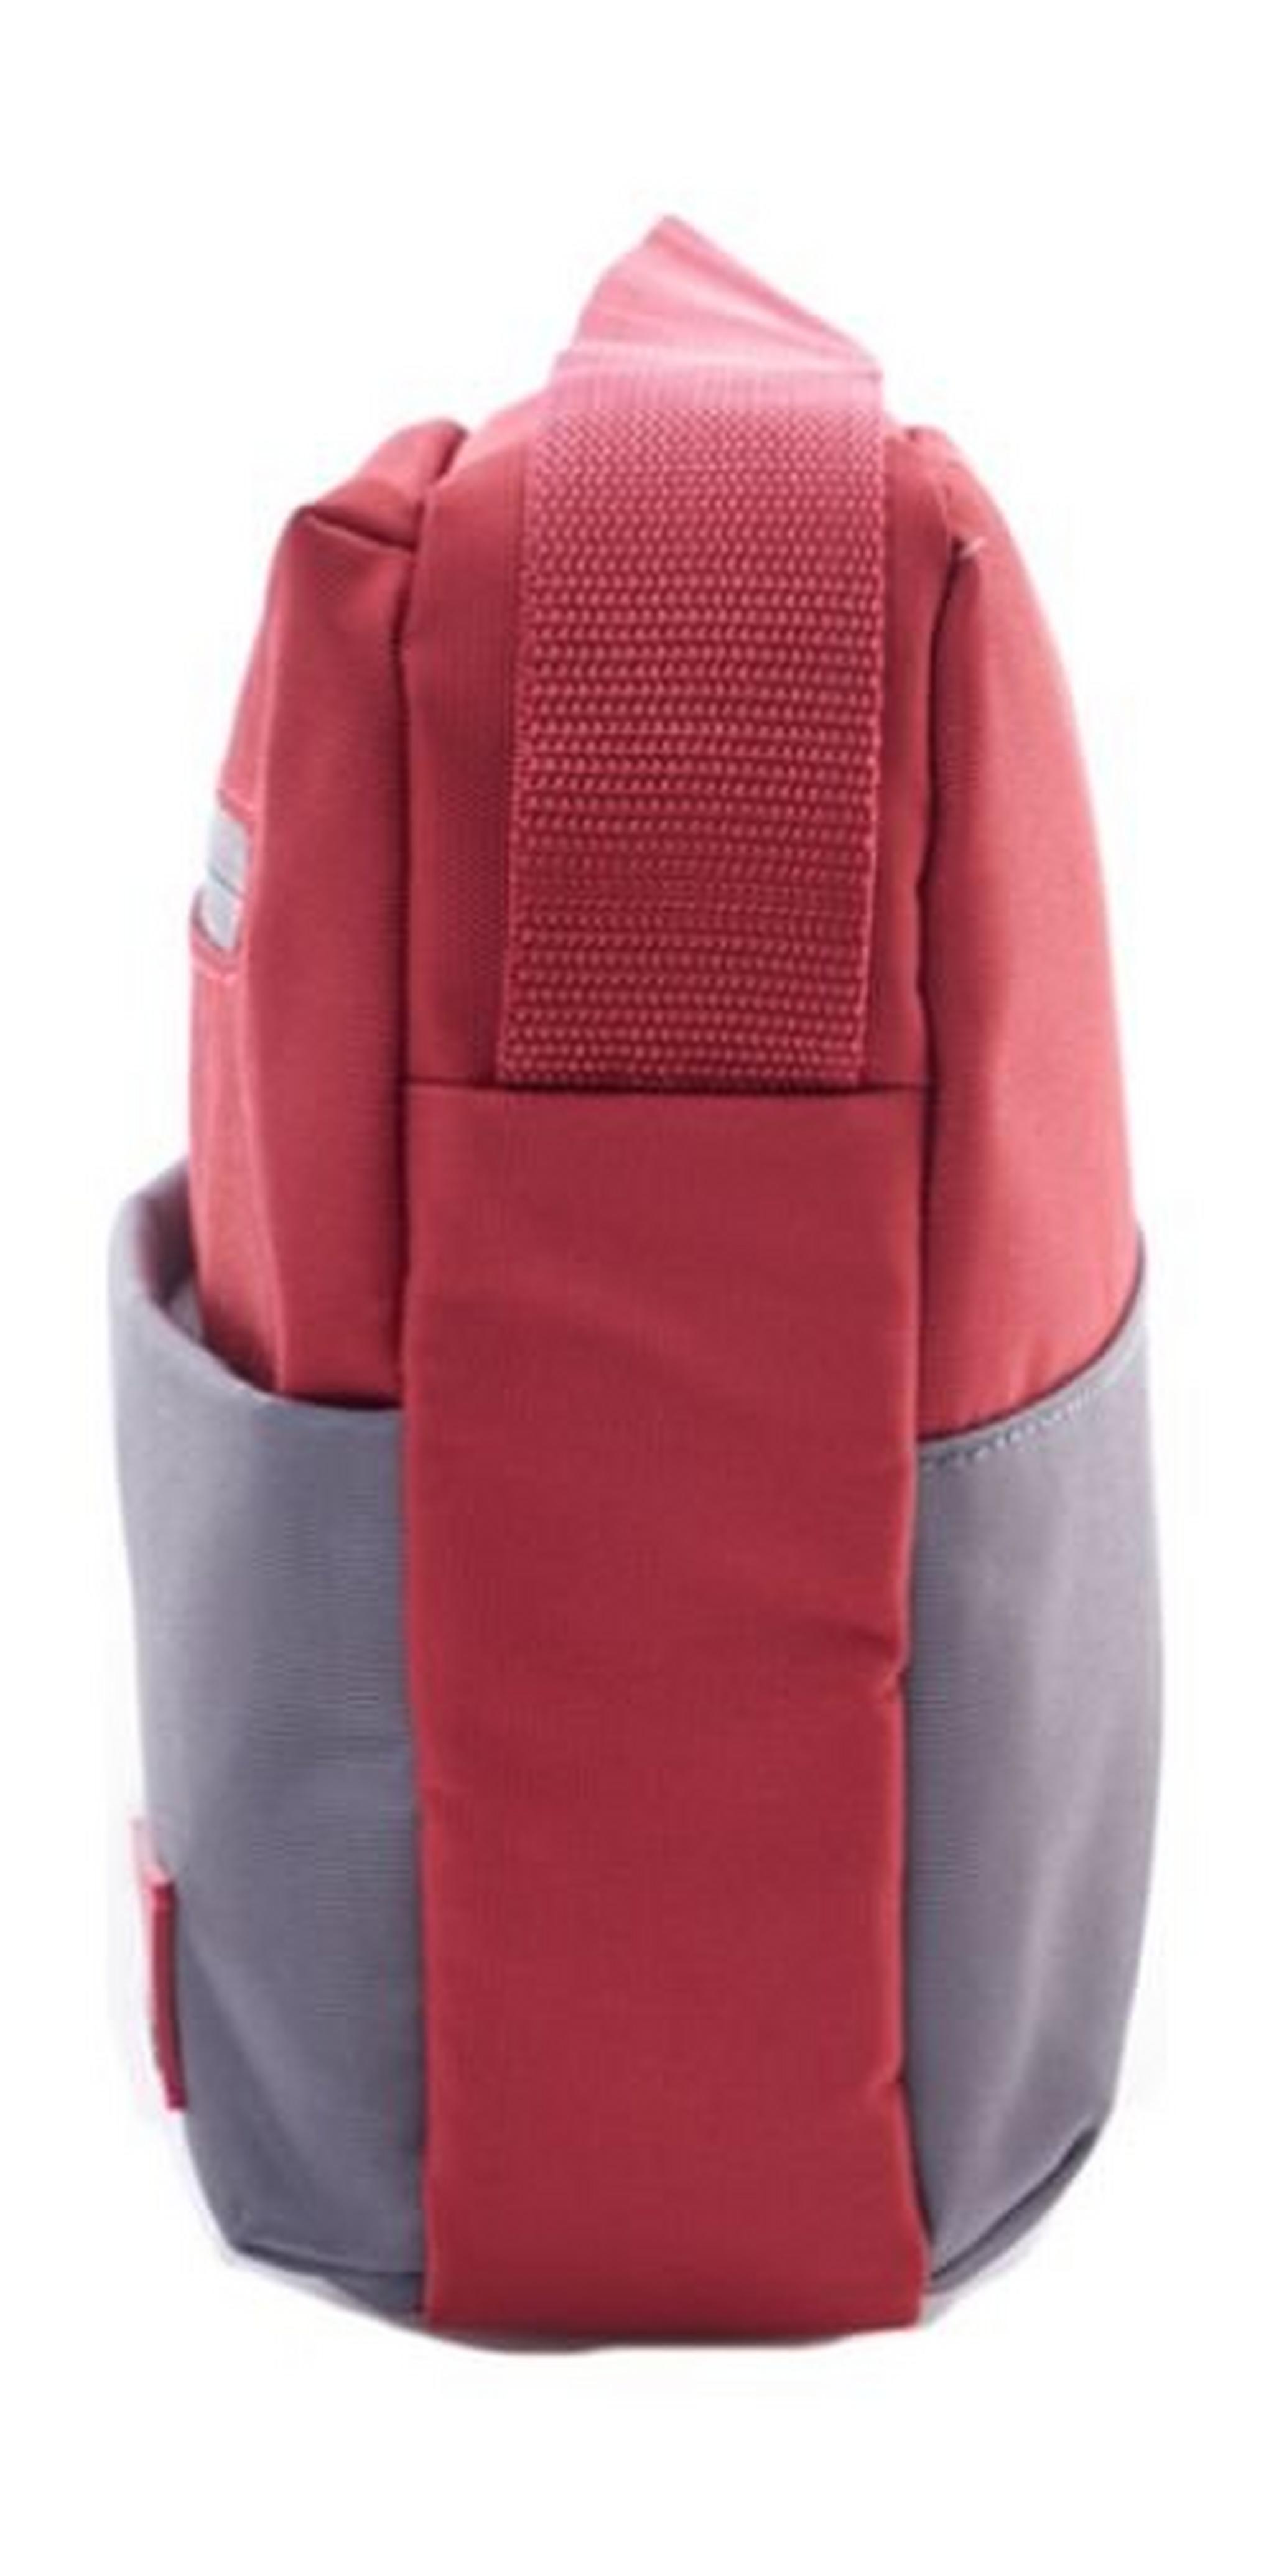 American Tourister Brixton Shoulder Bag (95SX80001) - Red/Grey